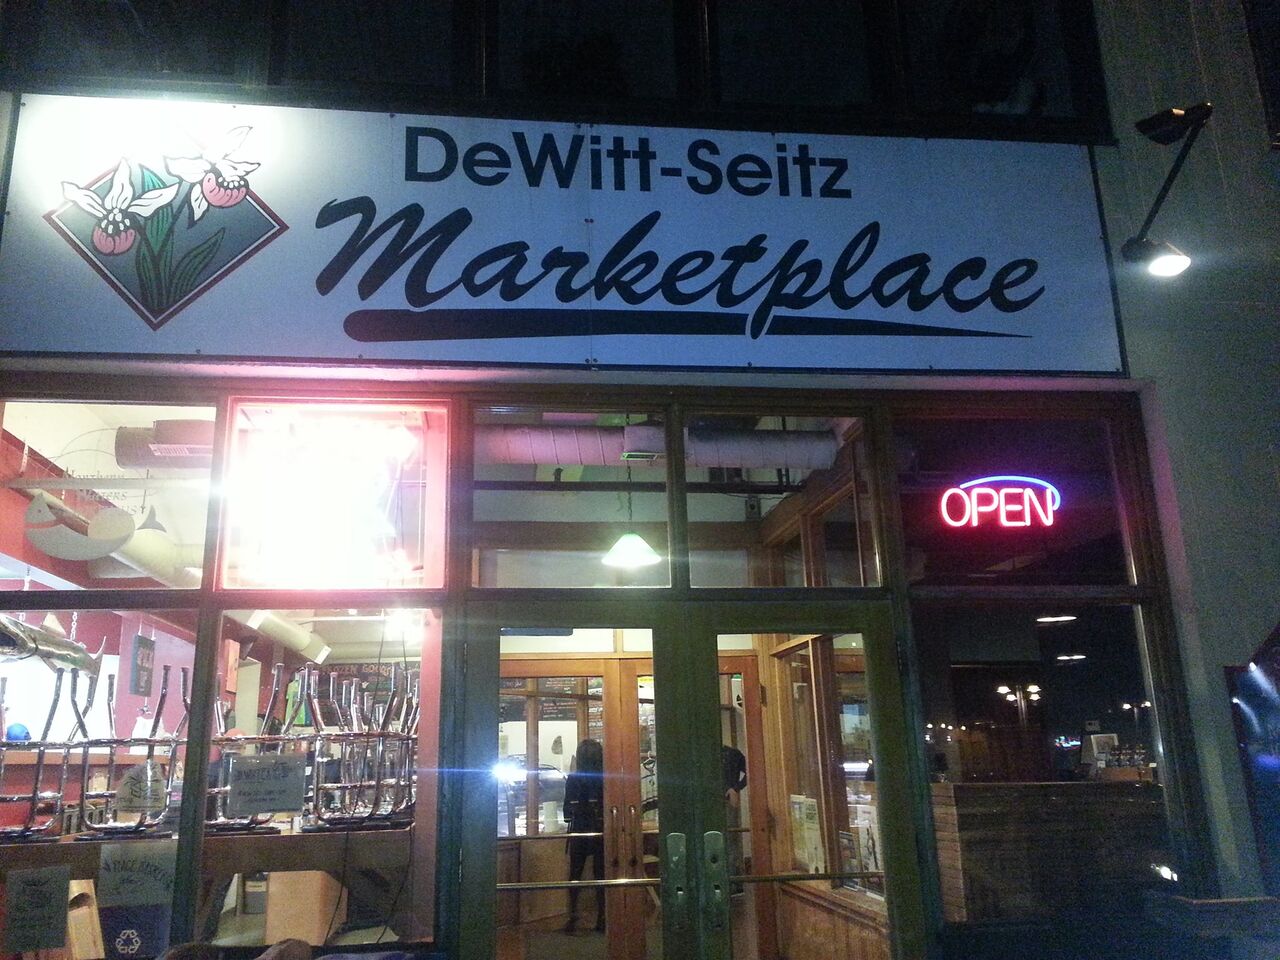 A photo of Dewitt-Seitz Marketplace